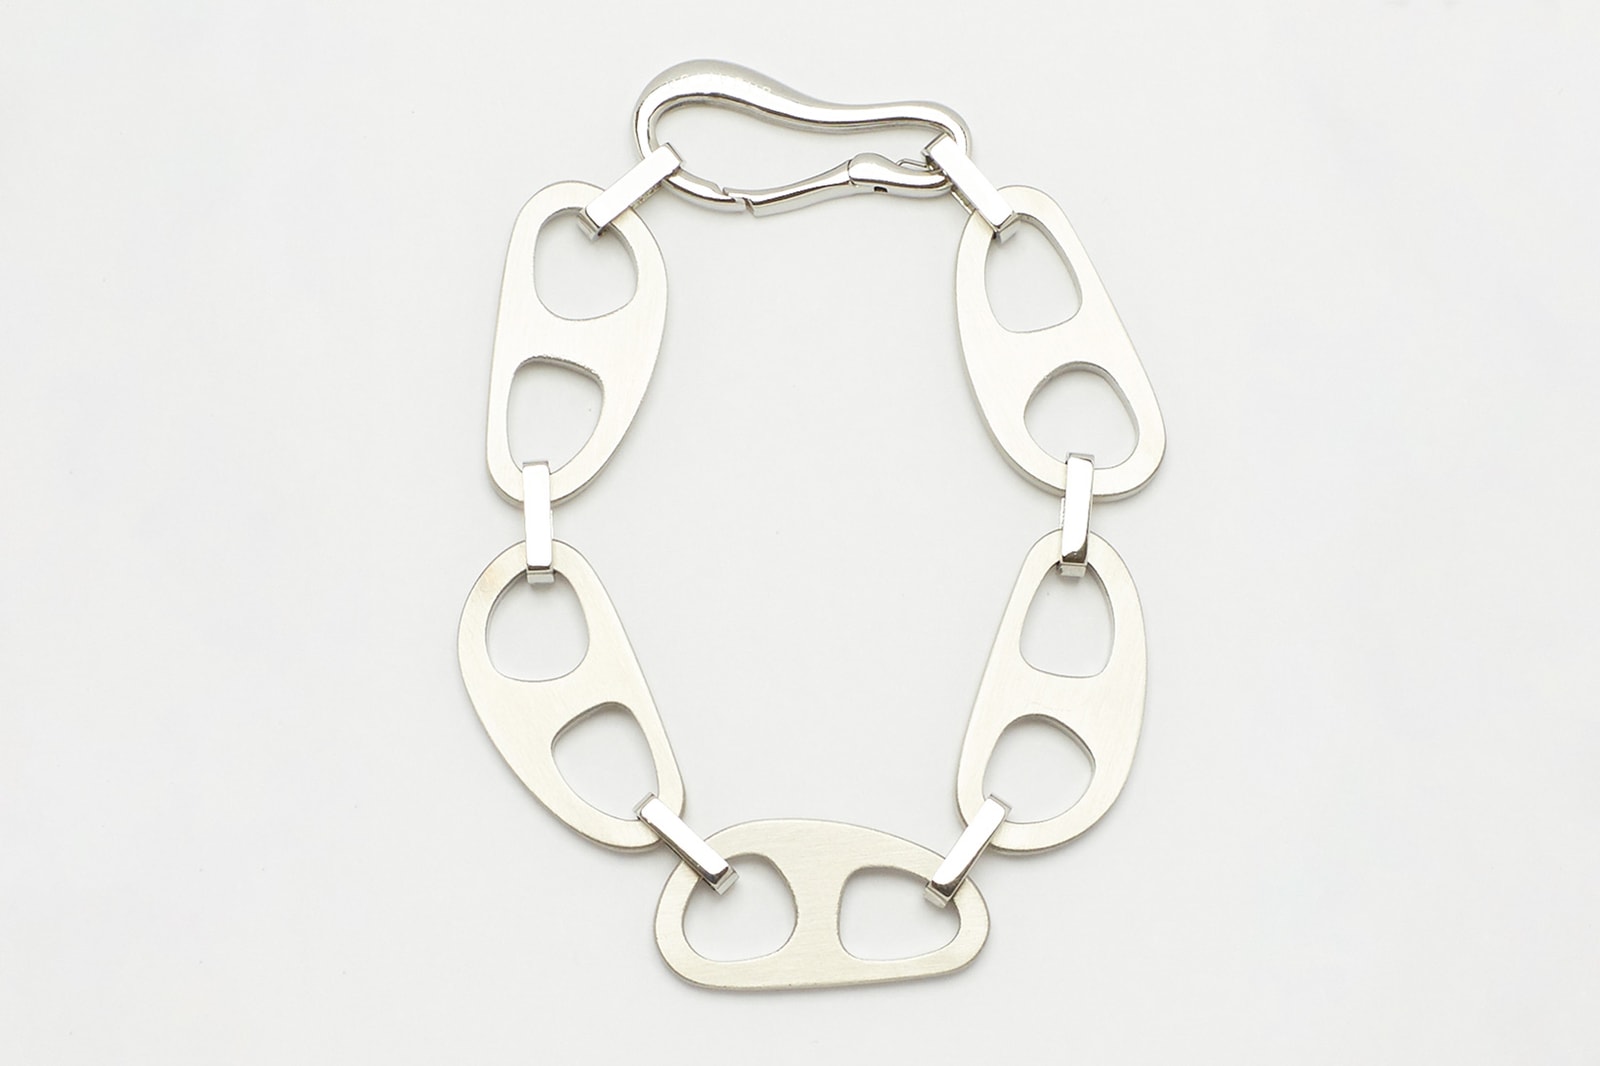 bagatiba tab collection soda cap necklaces earrings bracelets unisex minimal jewelry jessie andrews release